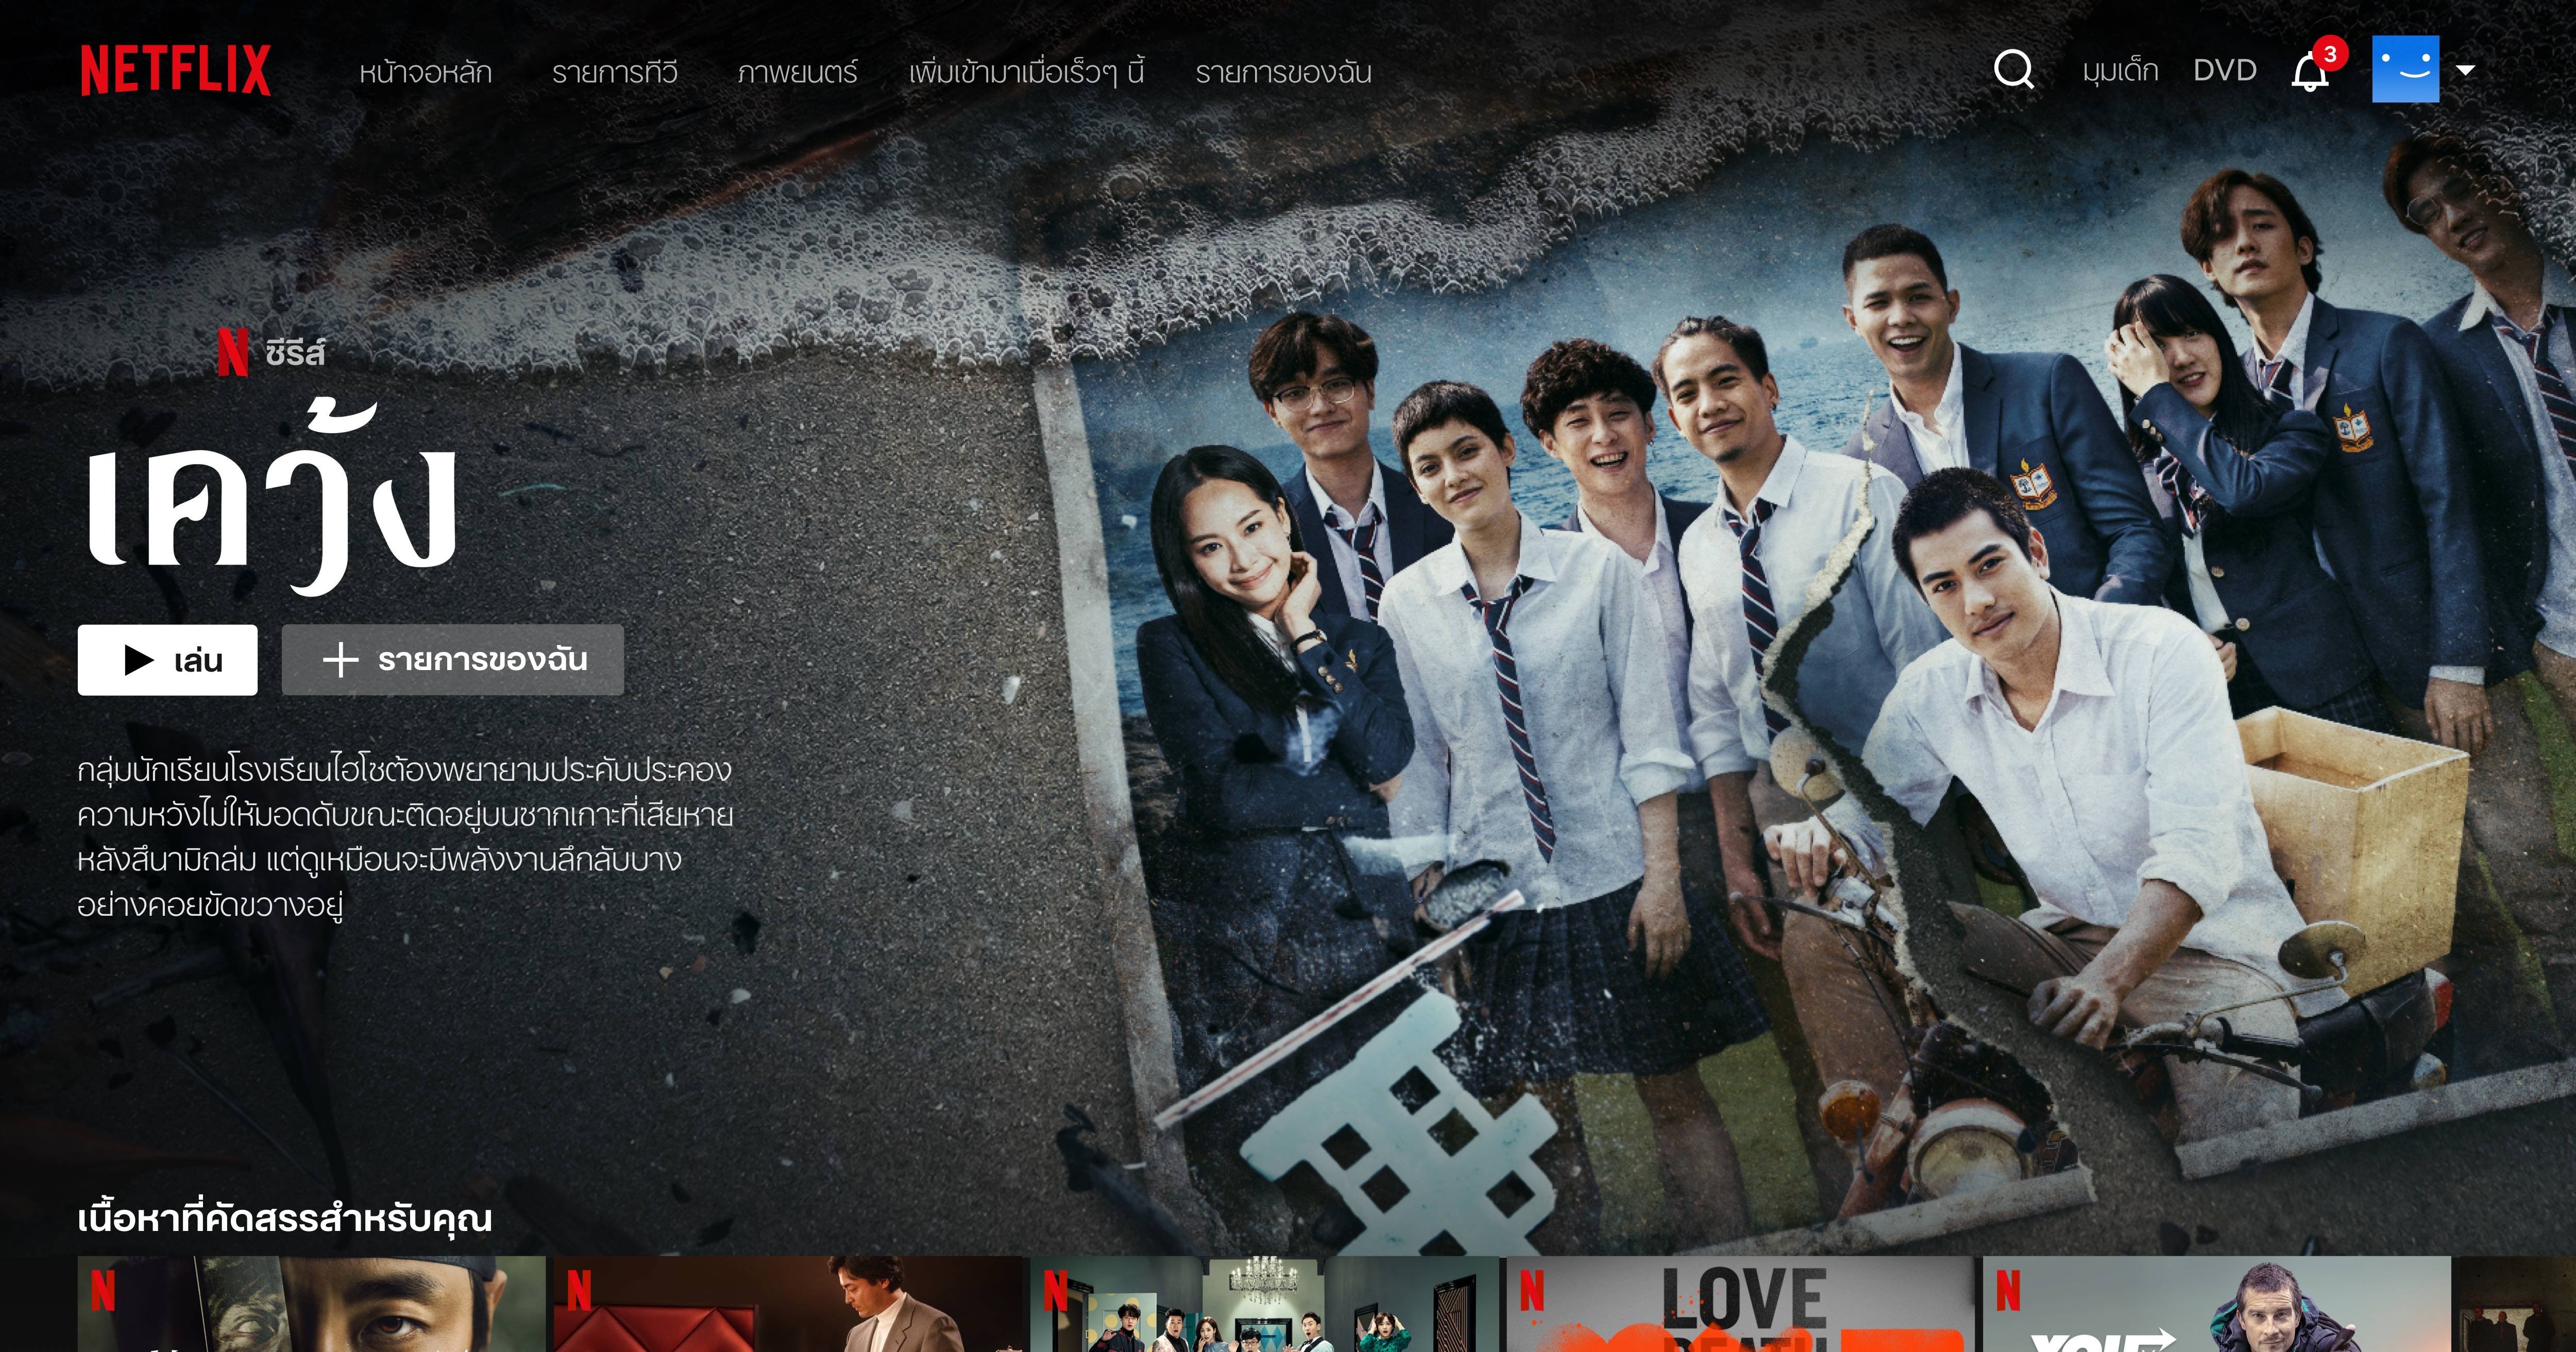 alt="Netflix UI Thai"